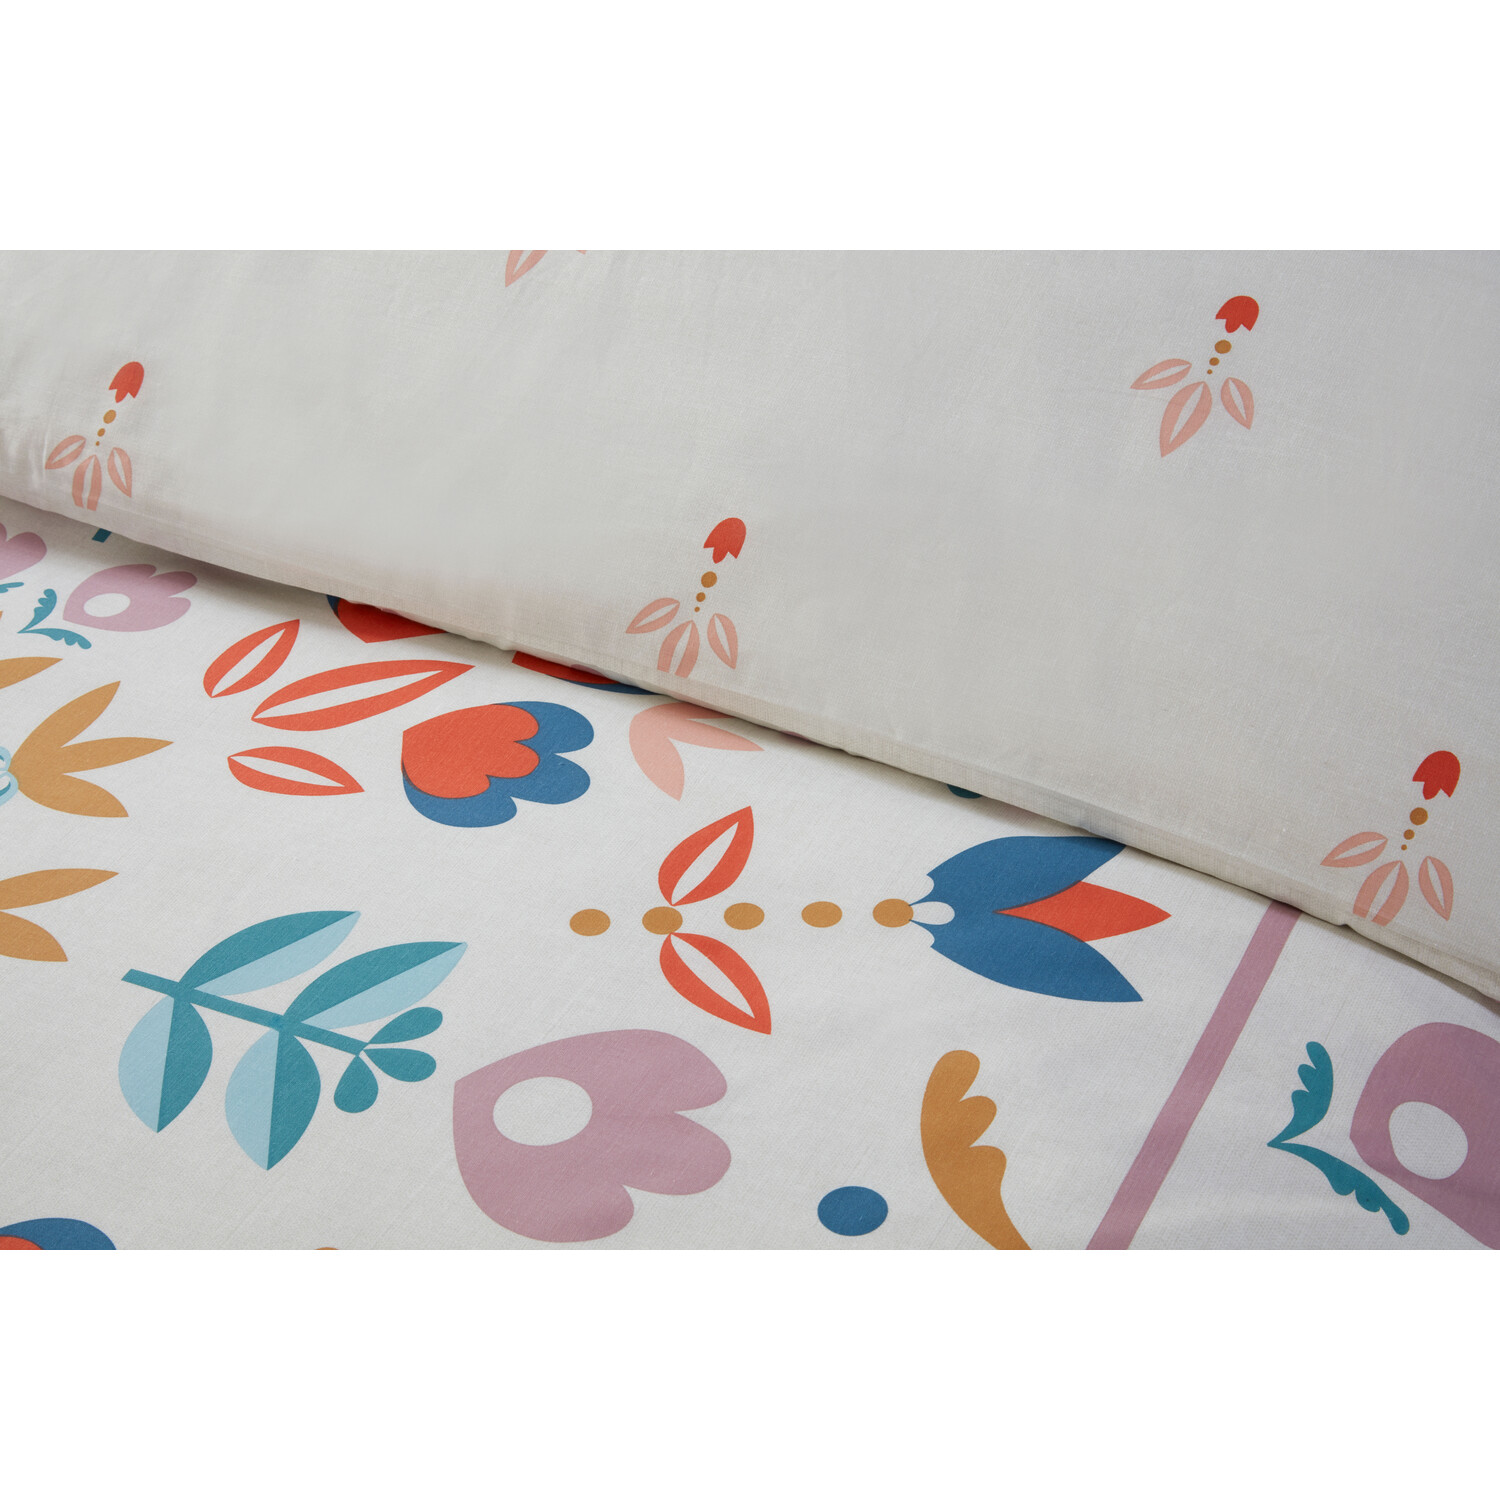 Amari Floral Duvet Cover and Pillowcase Set - Superking Image 4